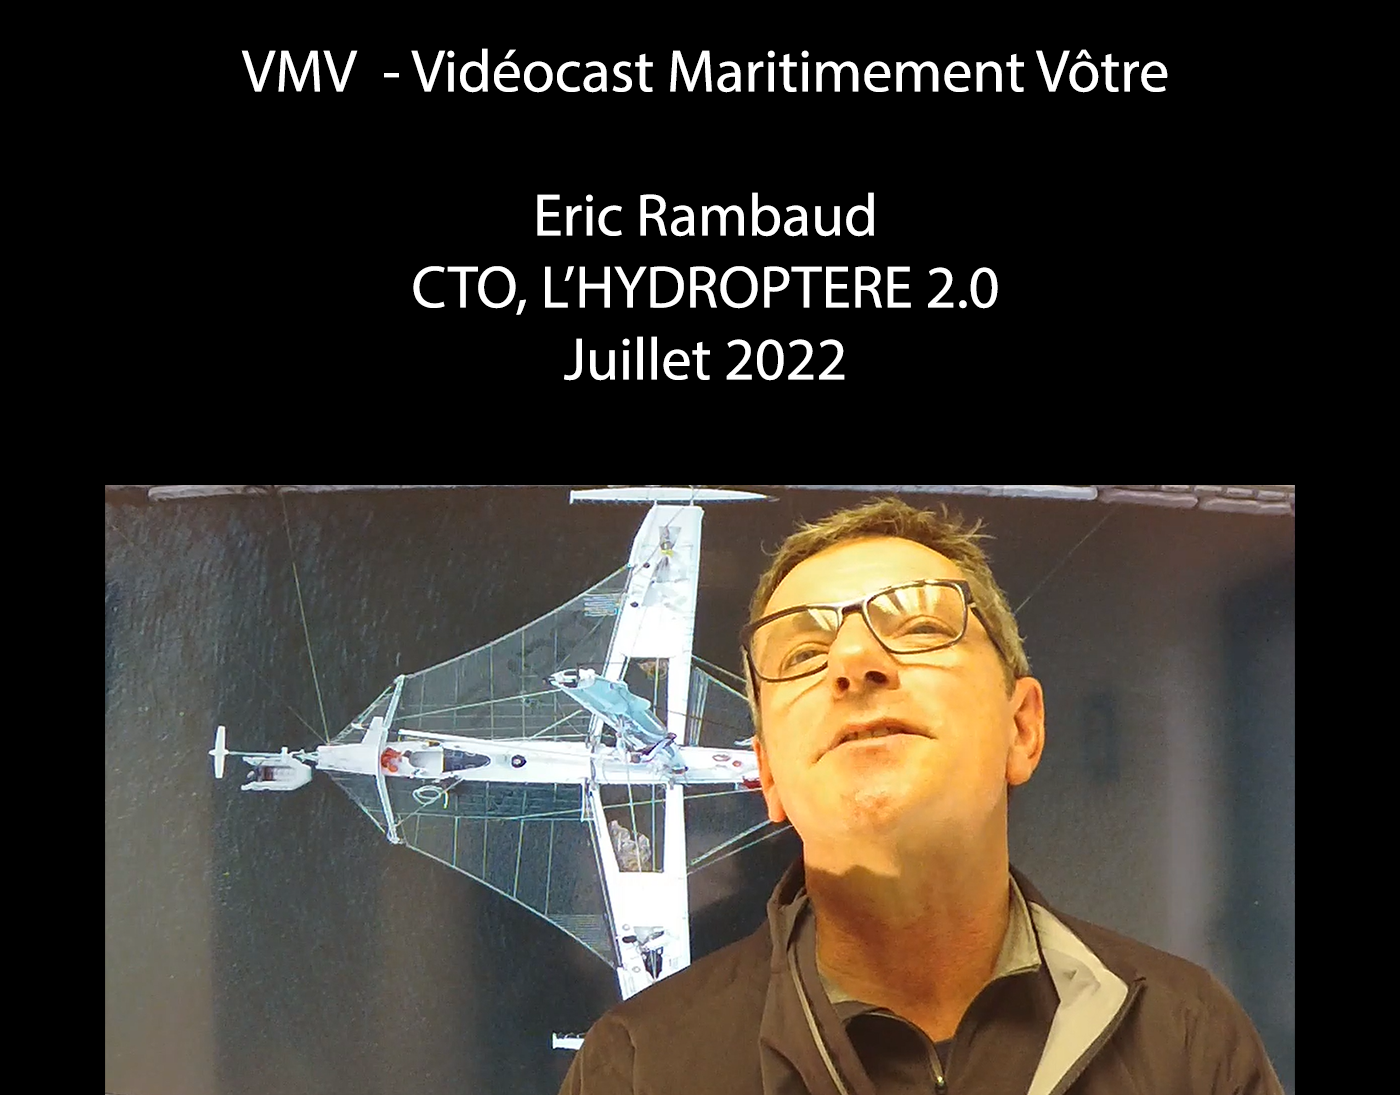 #39 VMV - Eric Rambaud, CTO, L'HYDROPTERE 2.0.